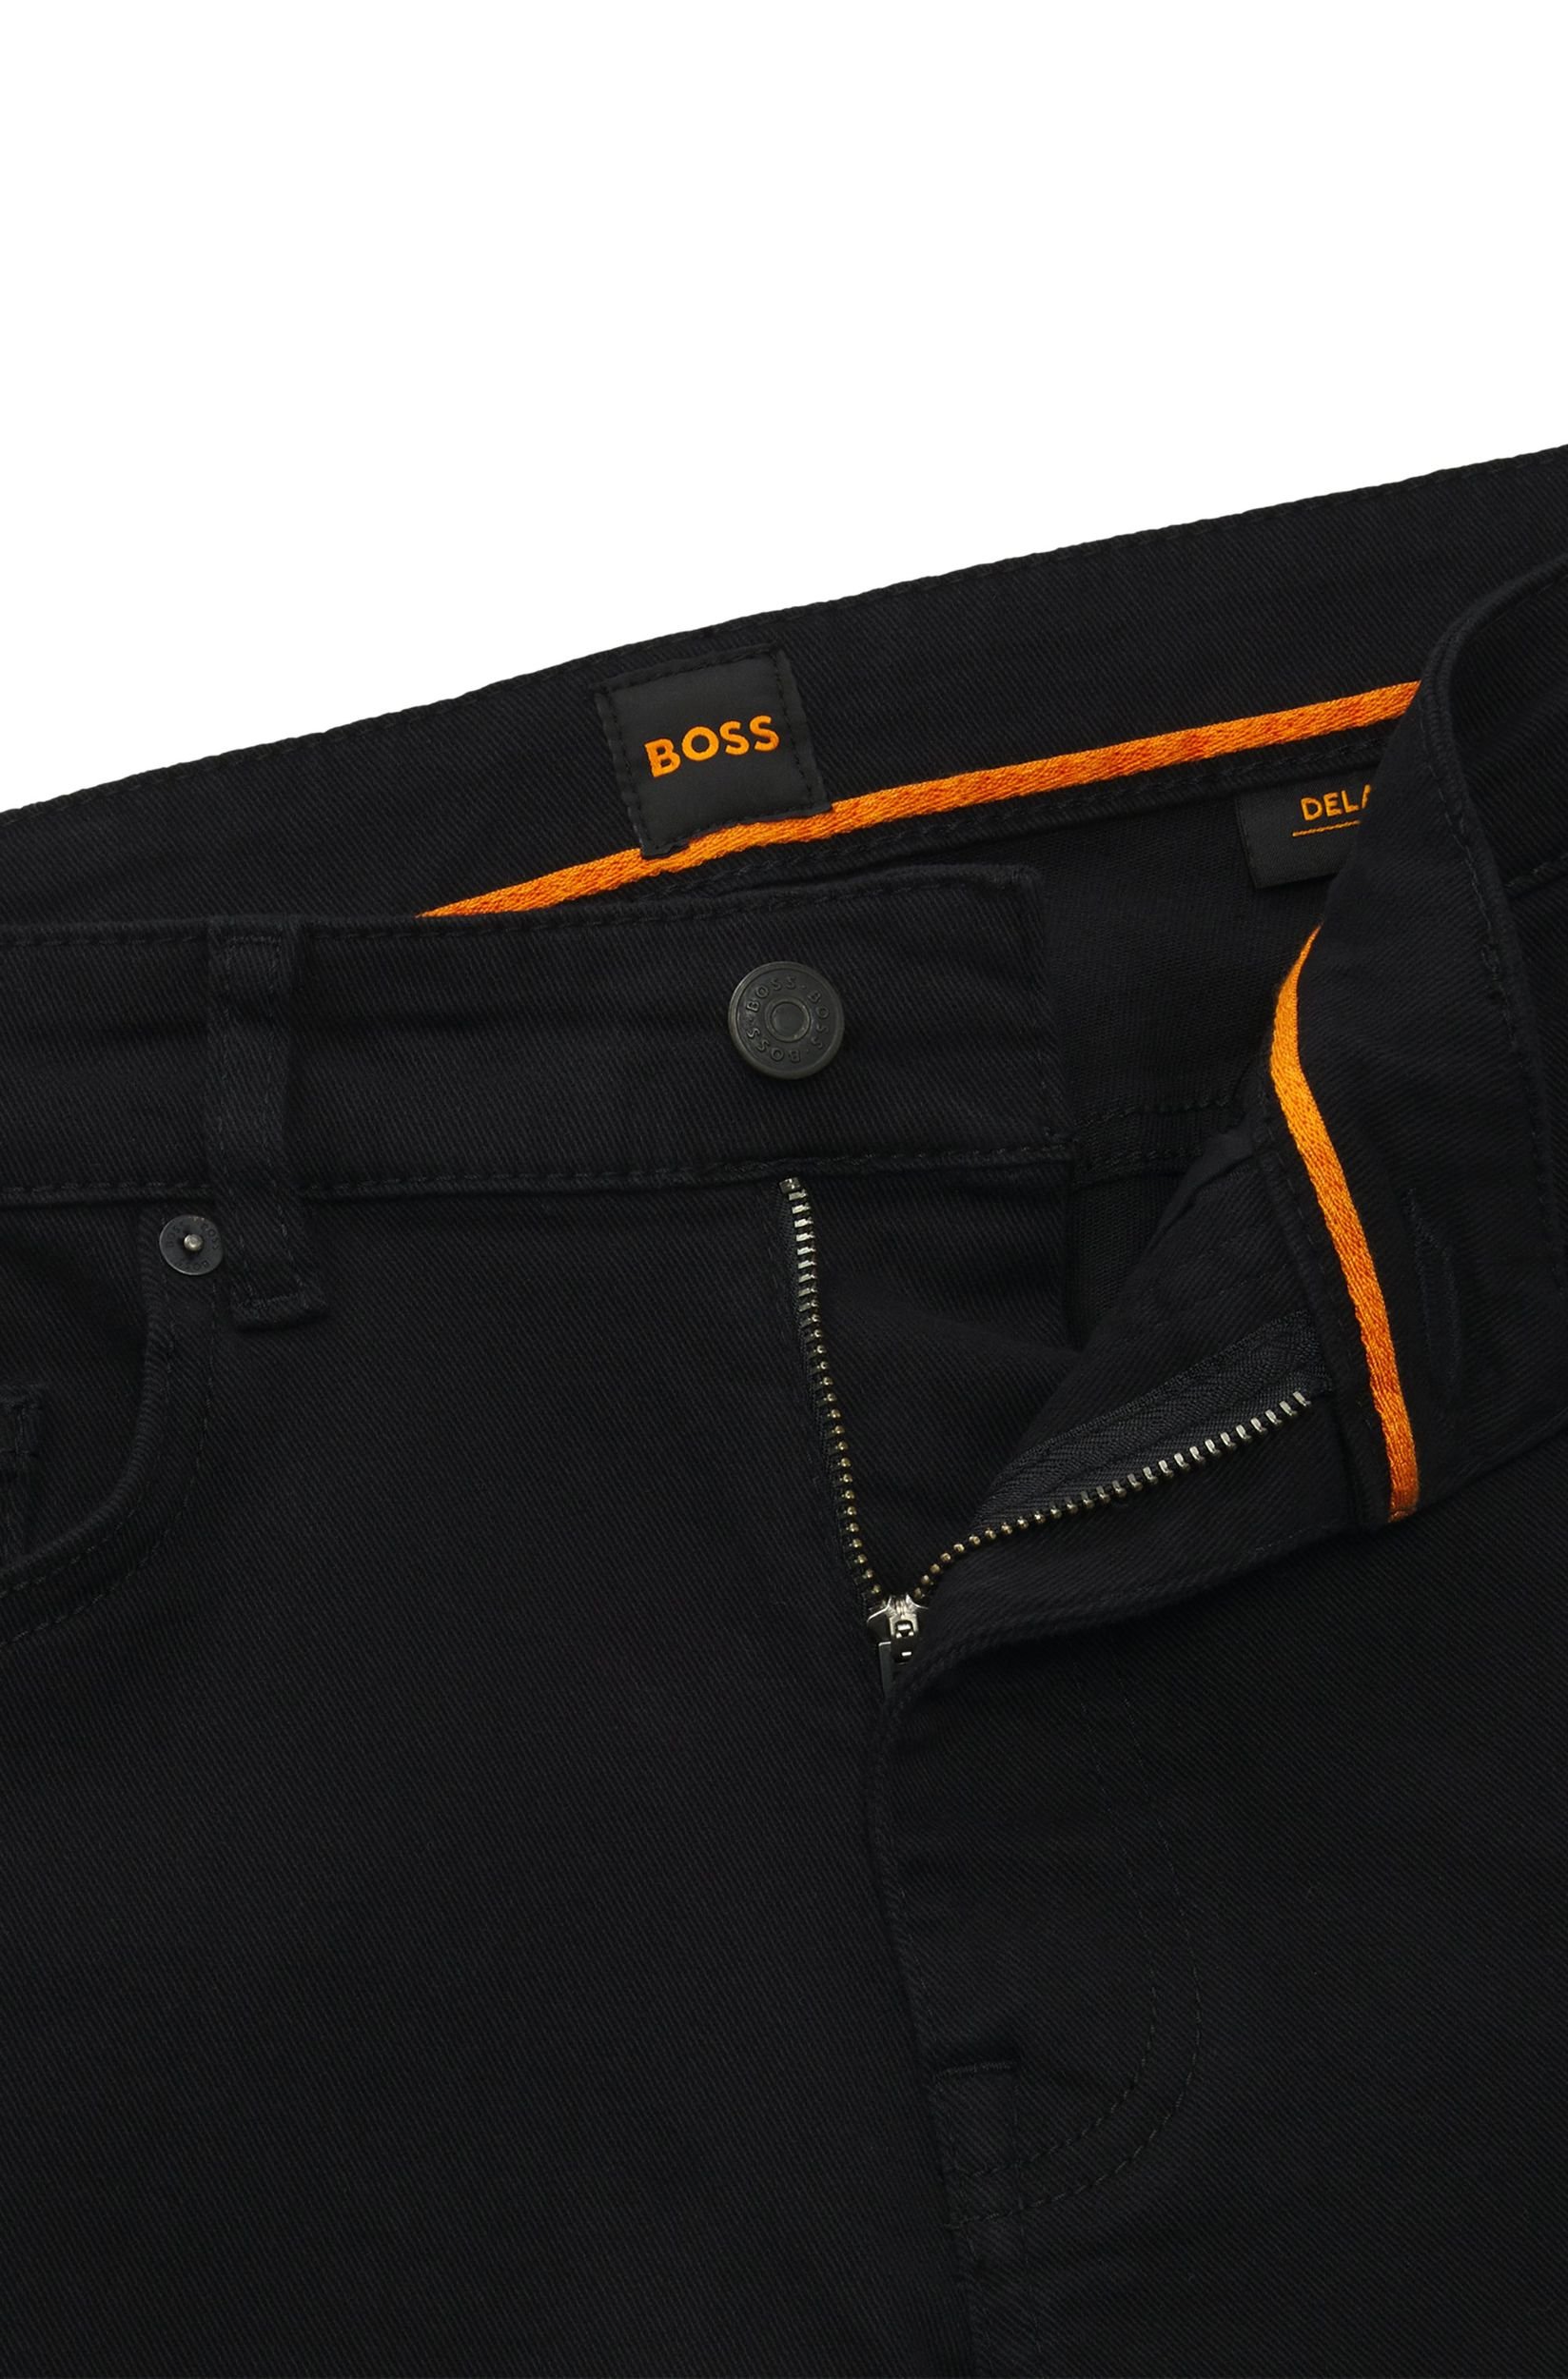 Boss Orange |  Boss Orange Slim Jeans  | 31/34